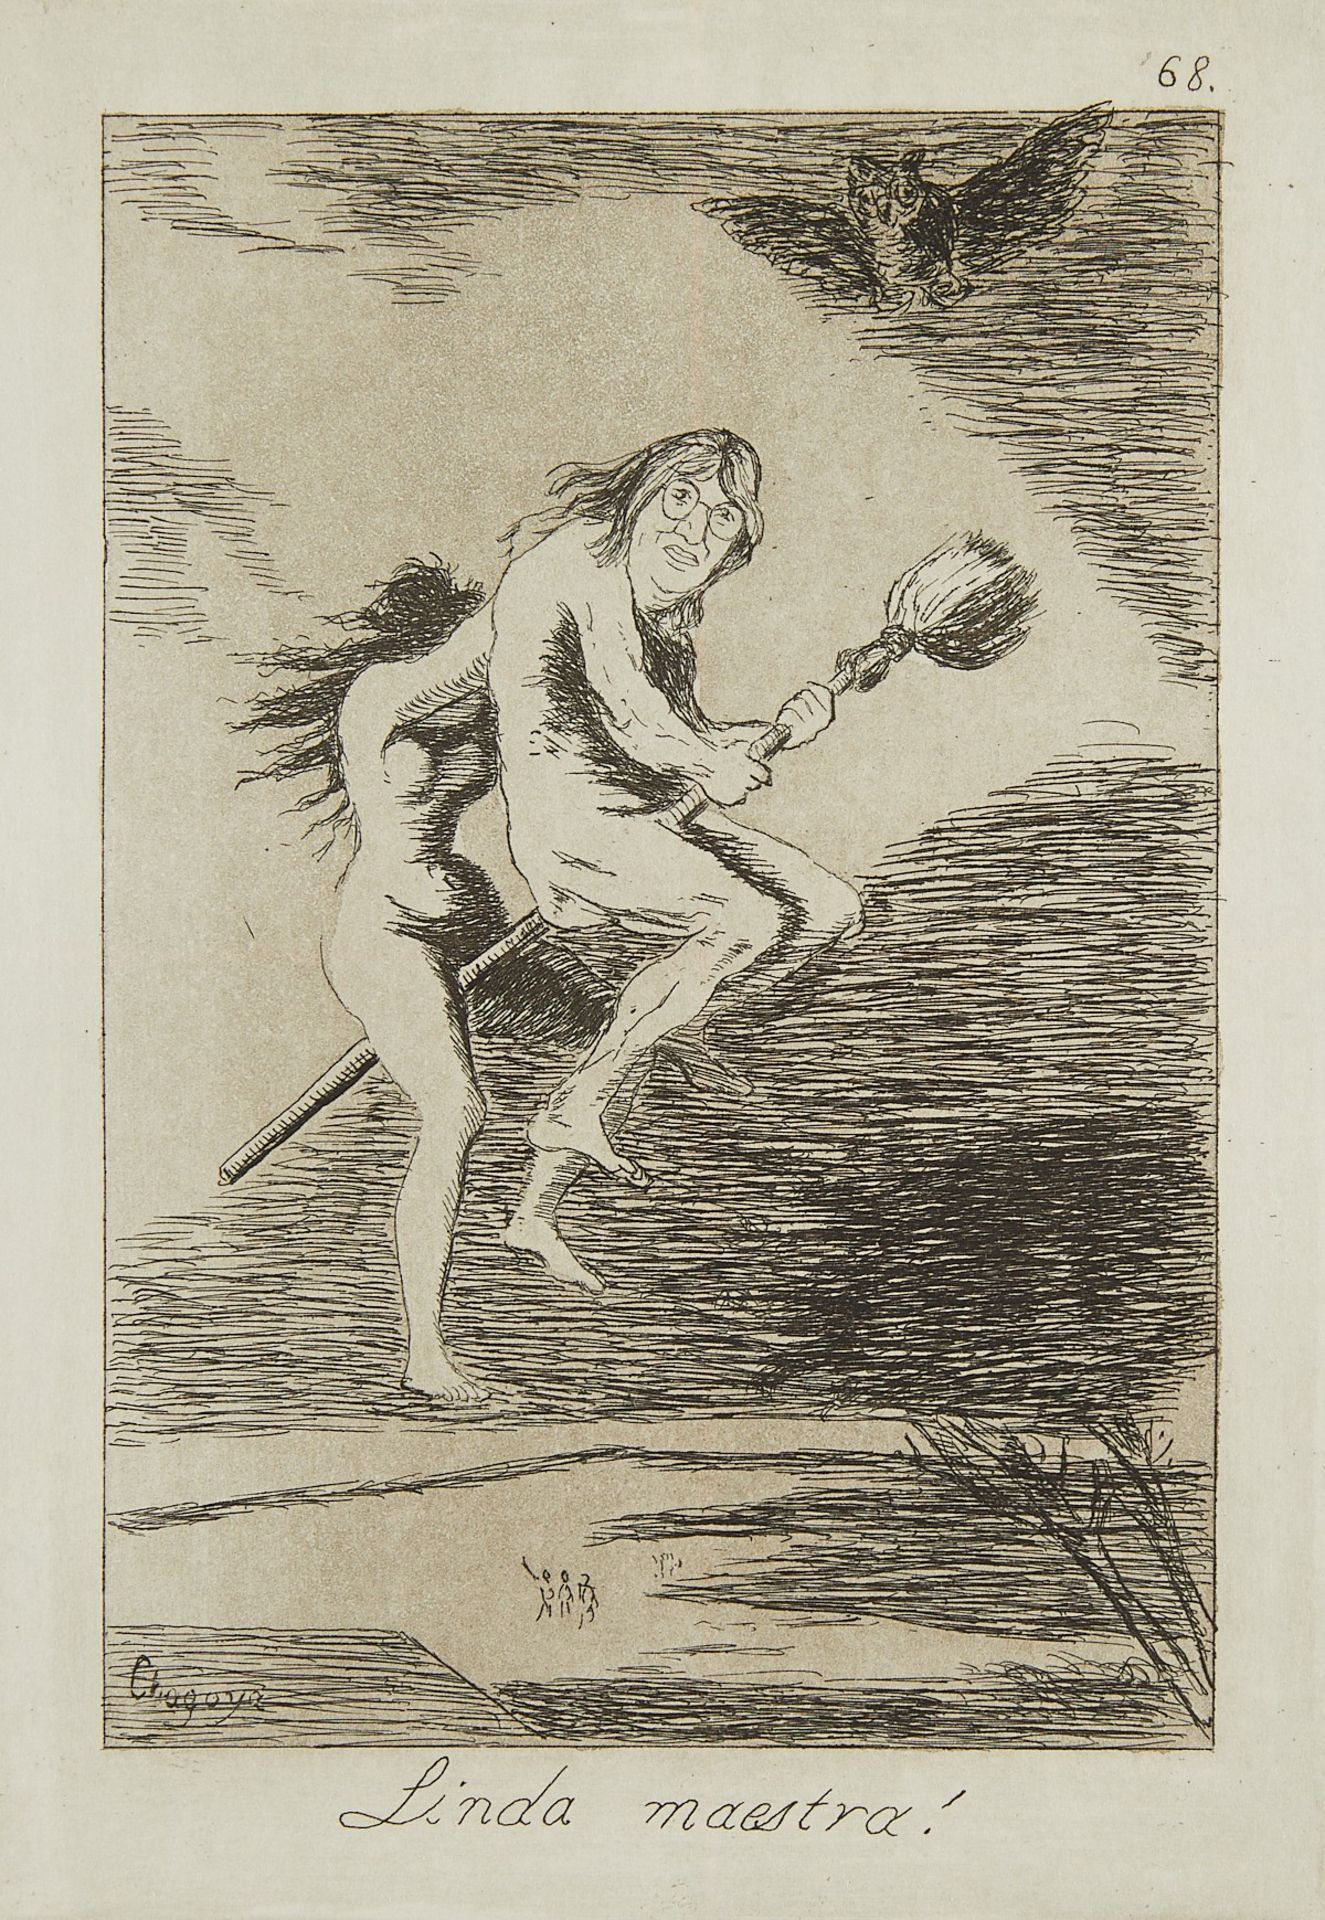 Grp: 8 Chagoya "Return To Goya's Caprichos" Suite - Image 16 of 40